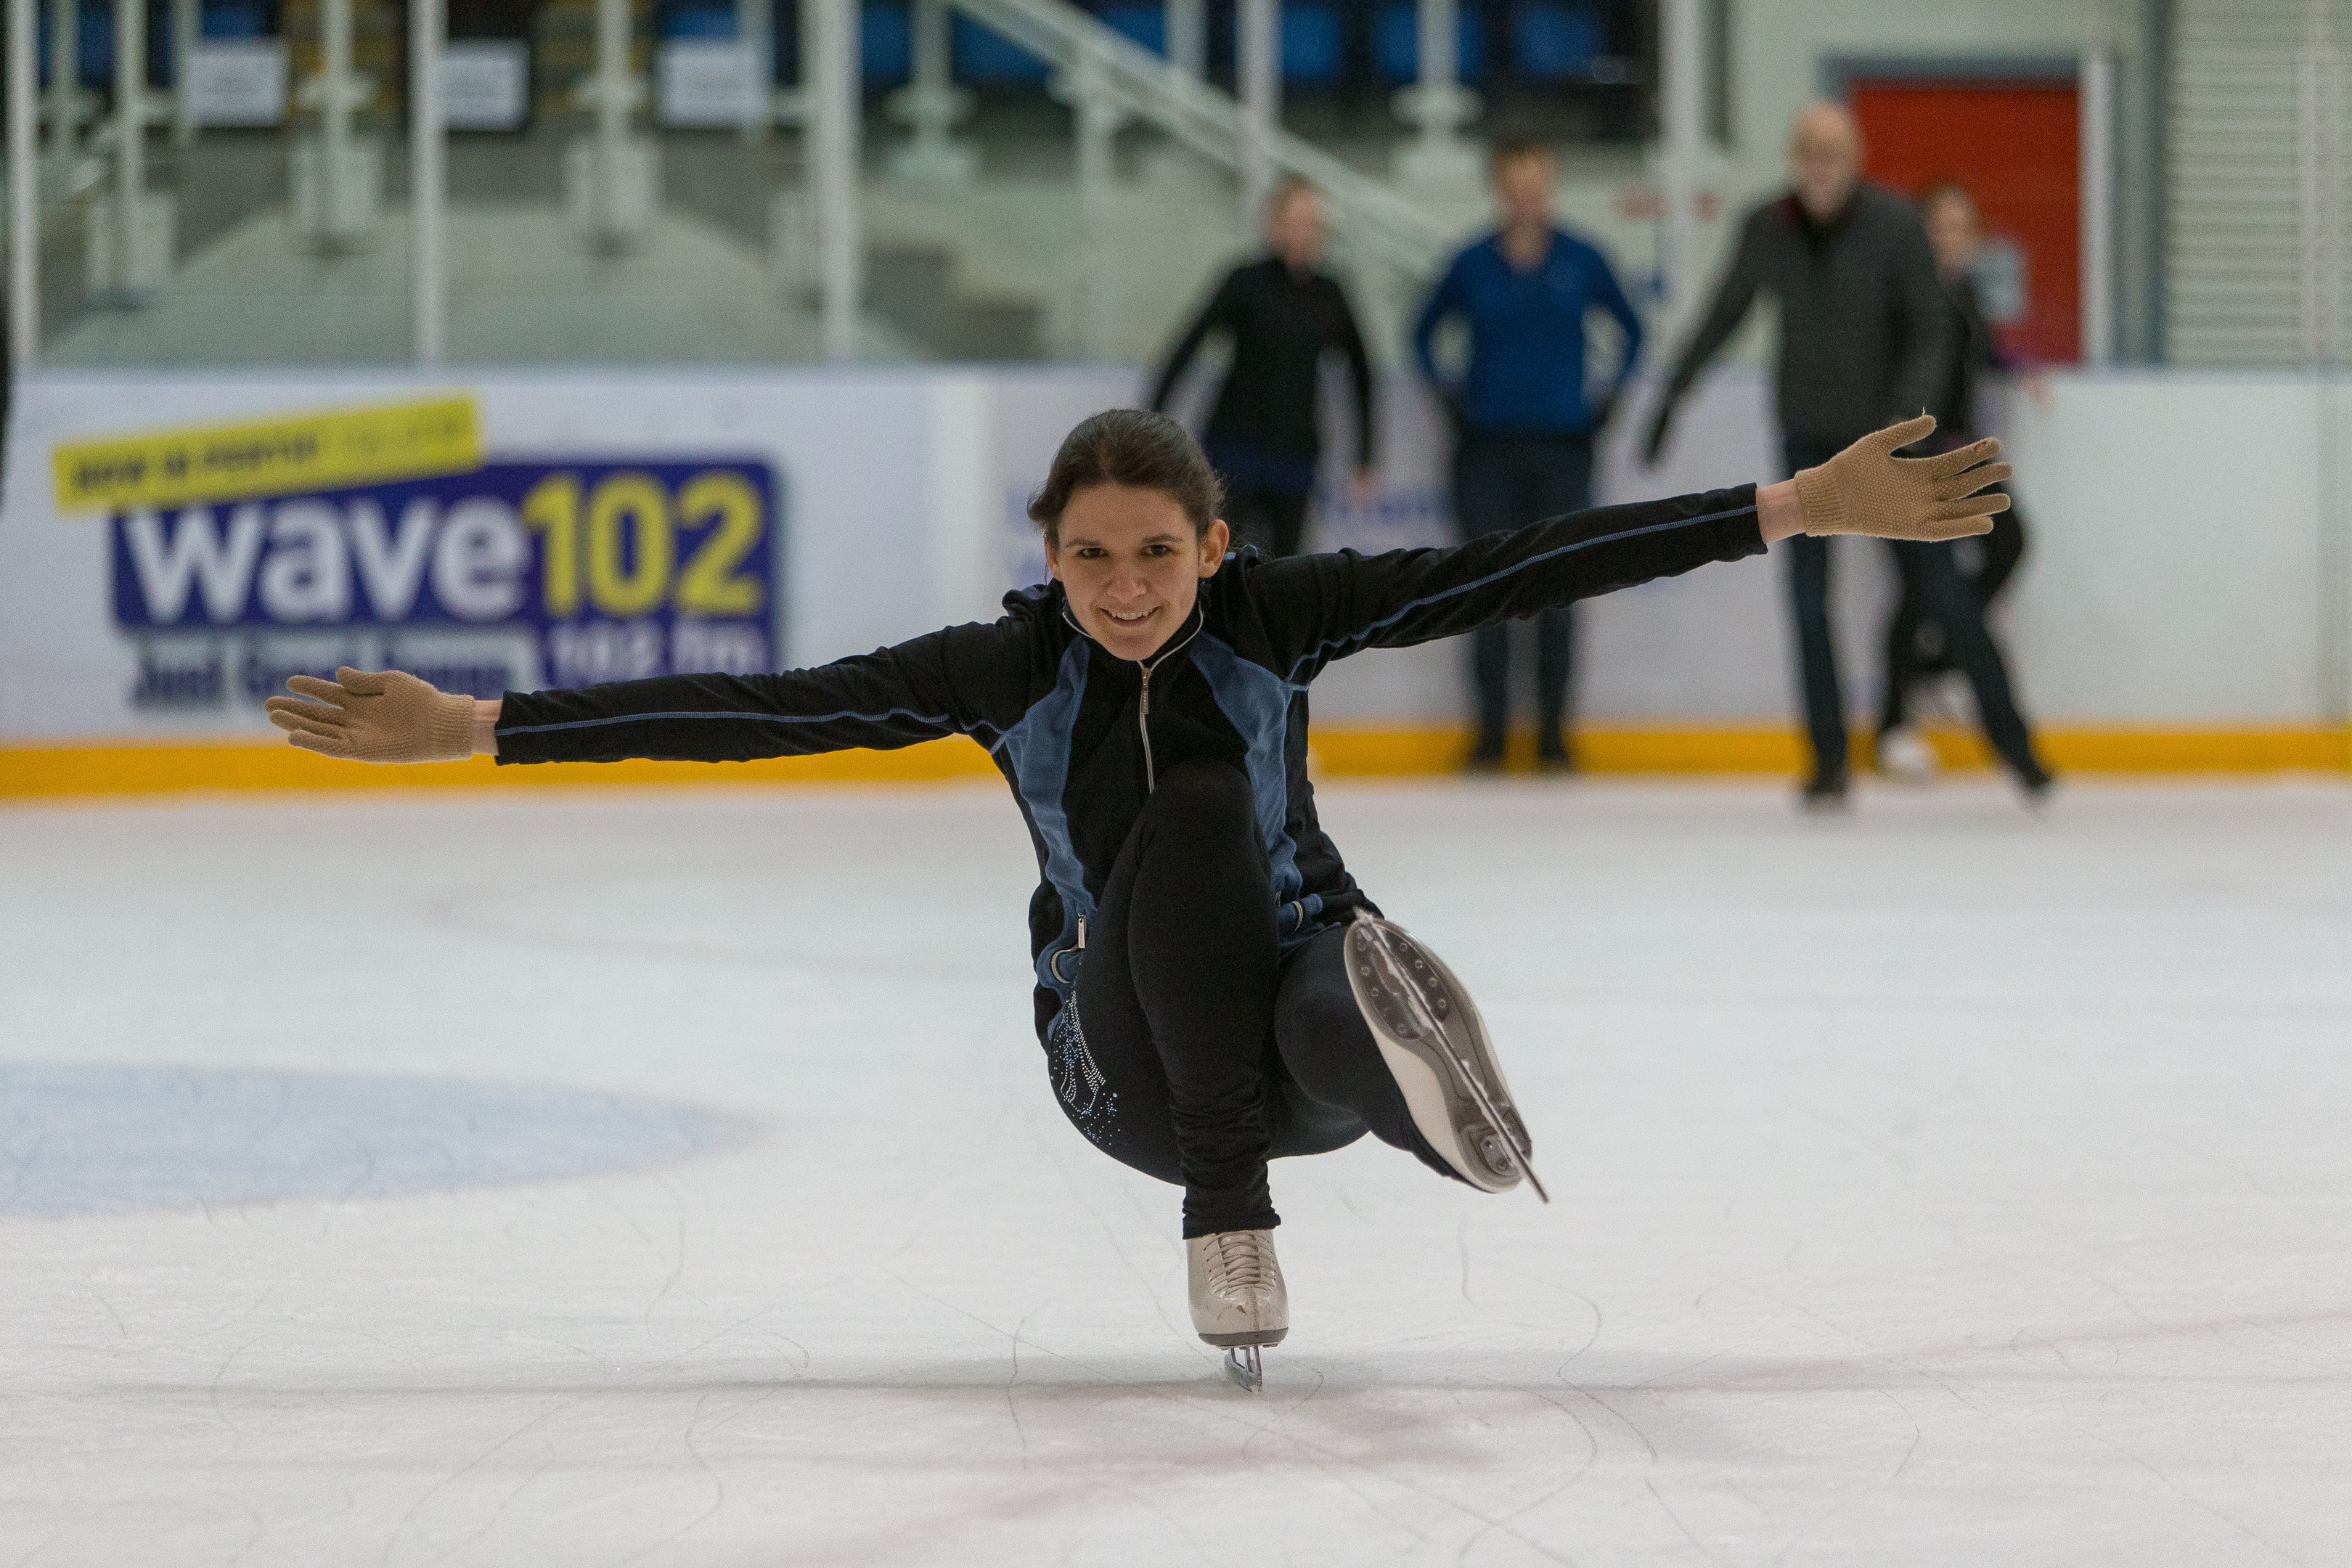 Courier Reporter Nadia Vidinova practising her moves.